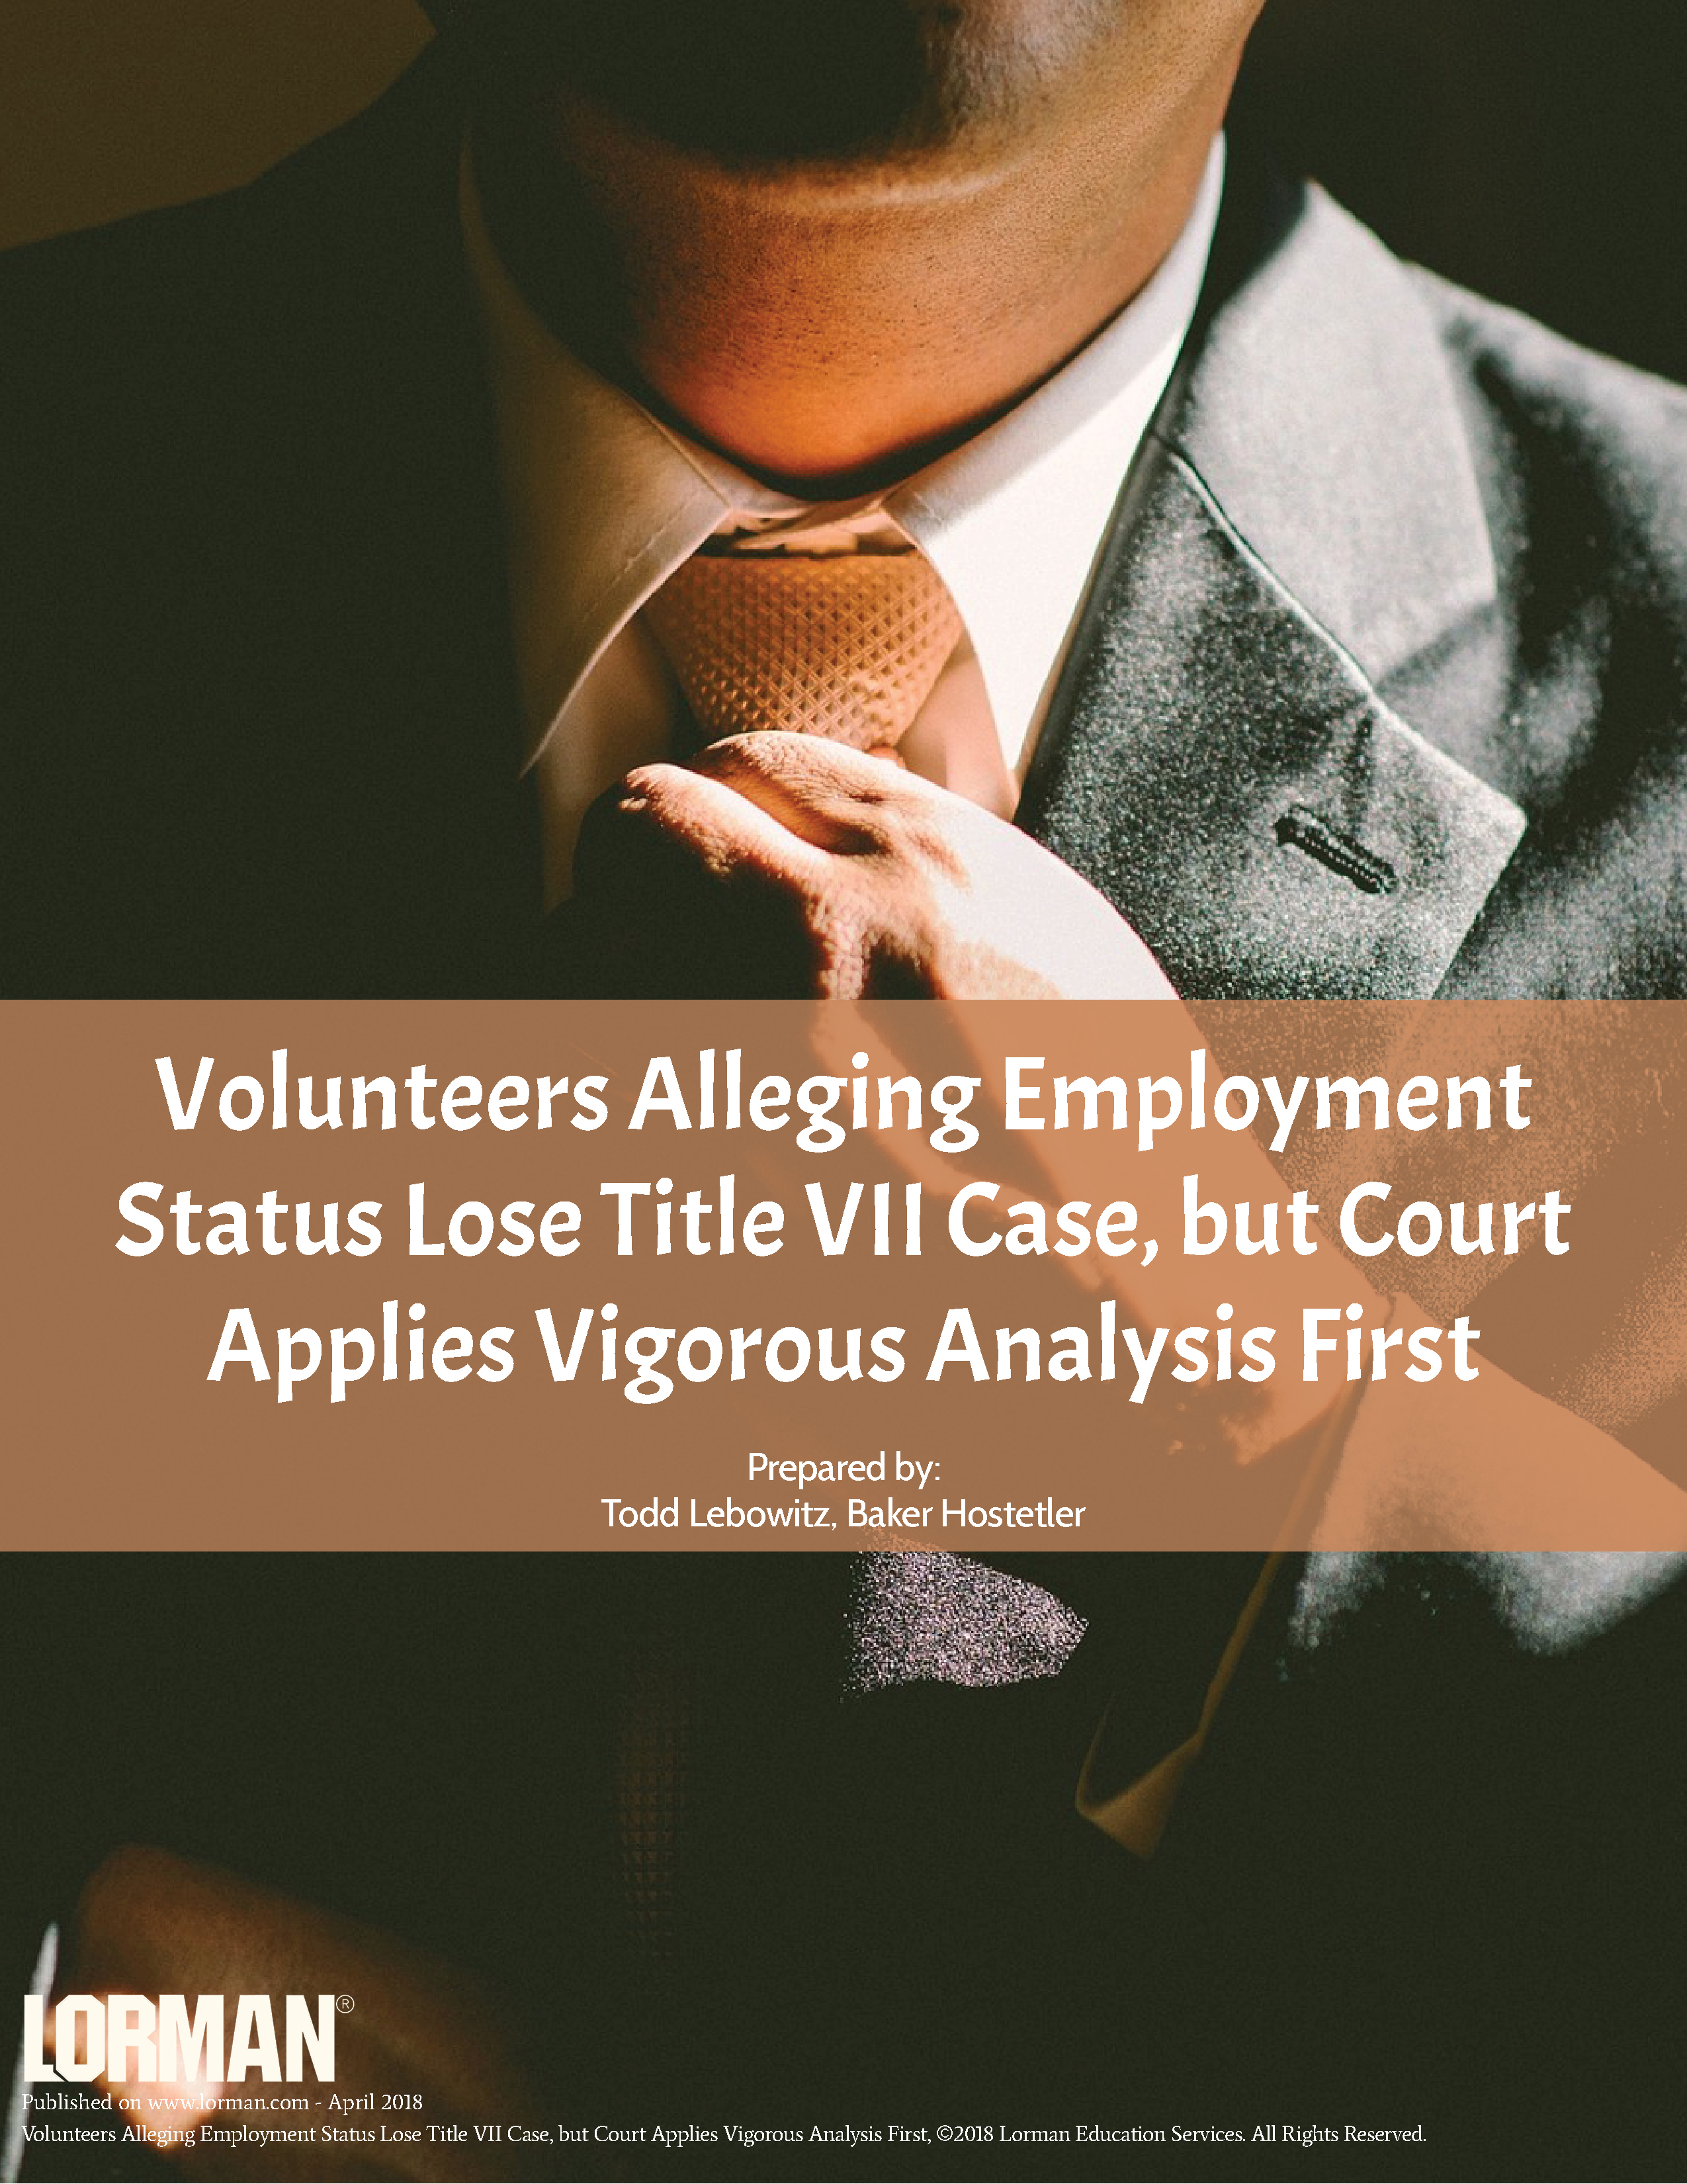 Volunteers Alleging Employment Status Lose Title VII Case but Court Applies Vigorous Analysis First